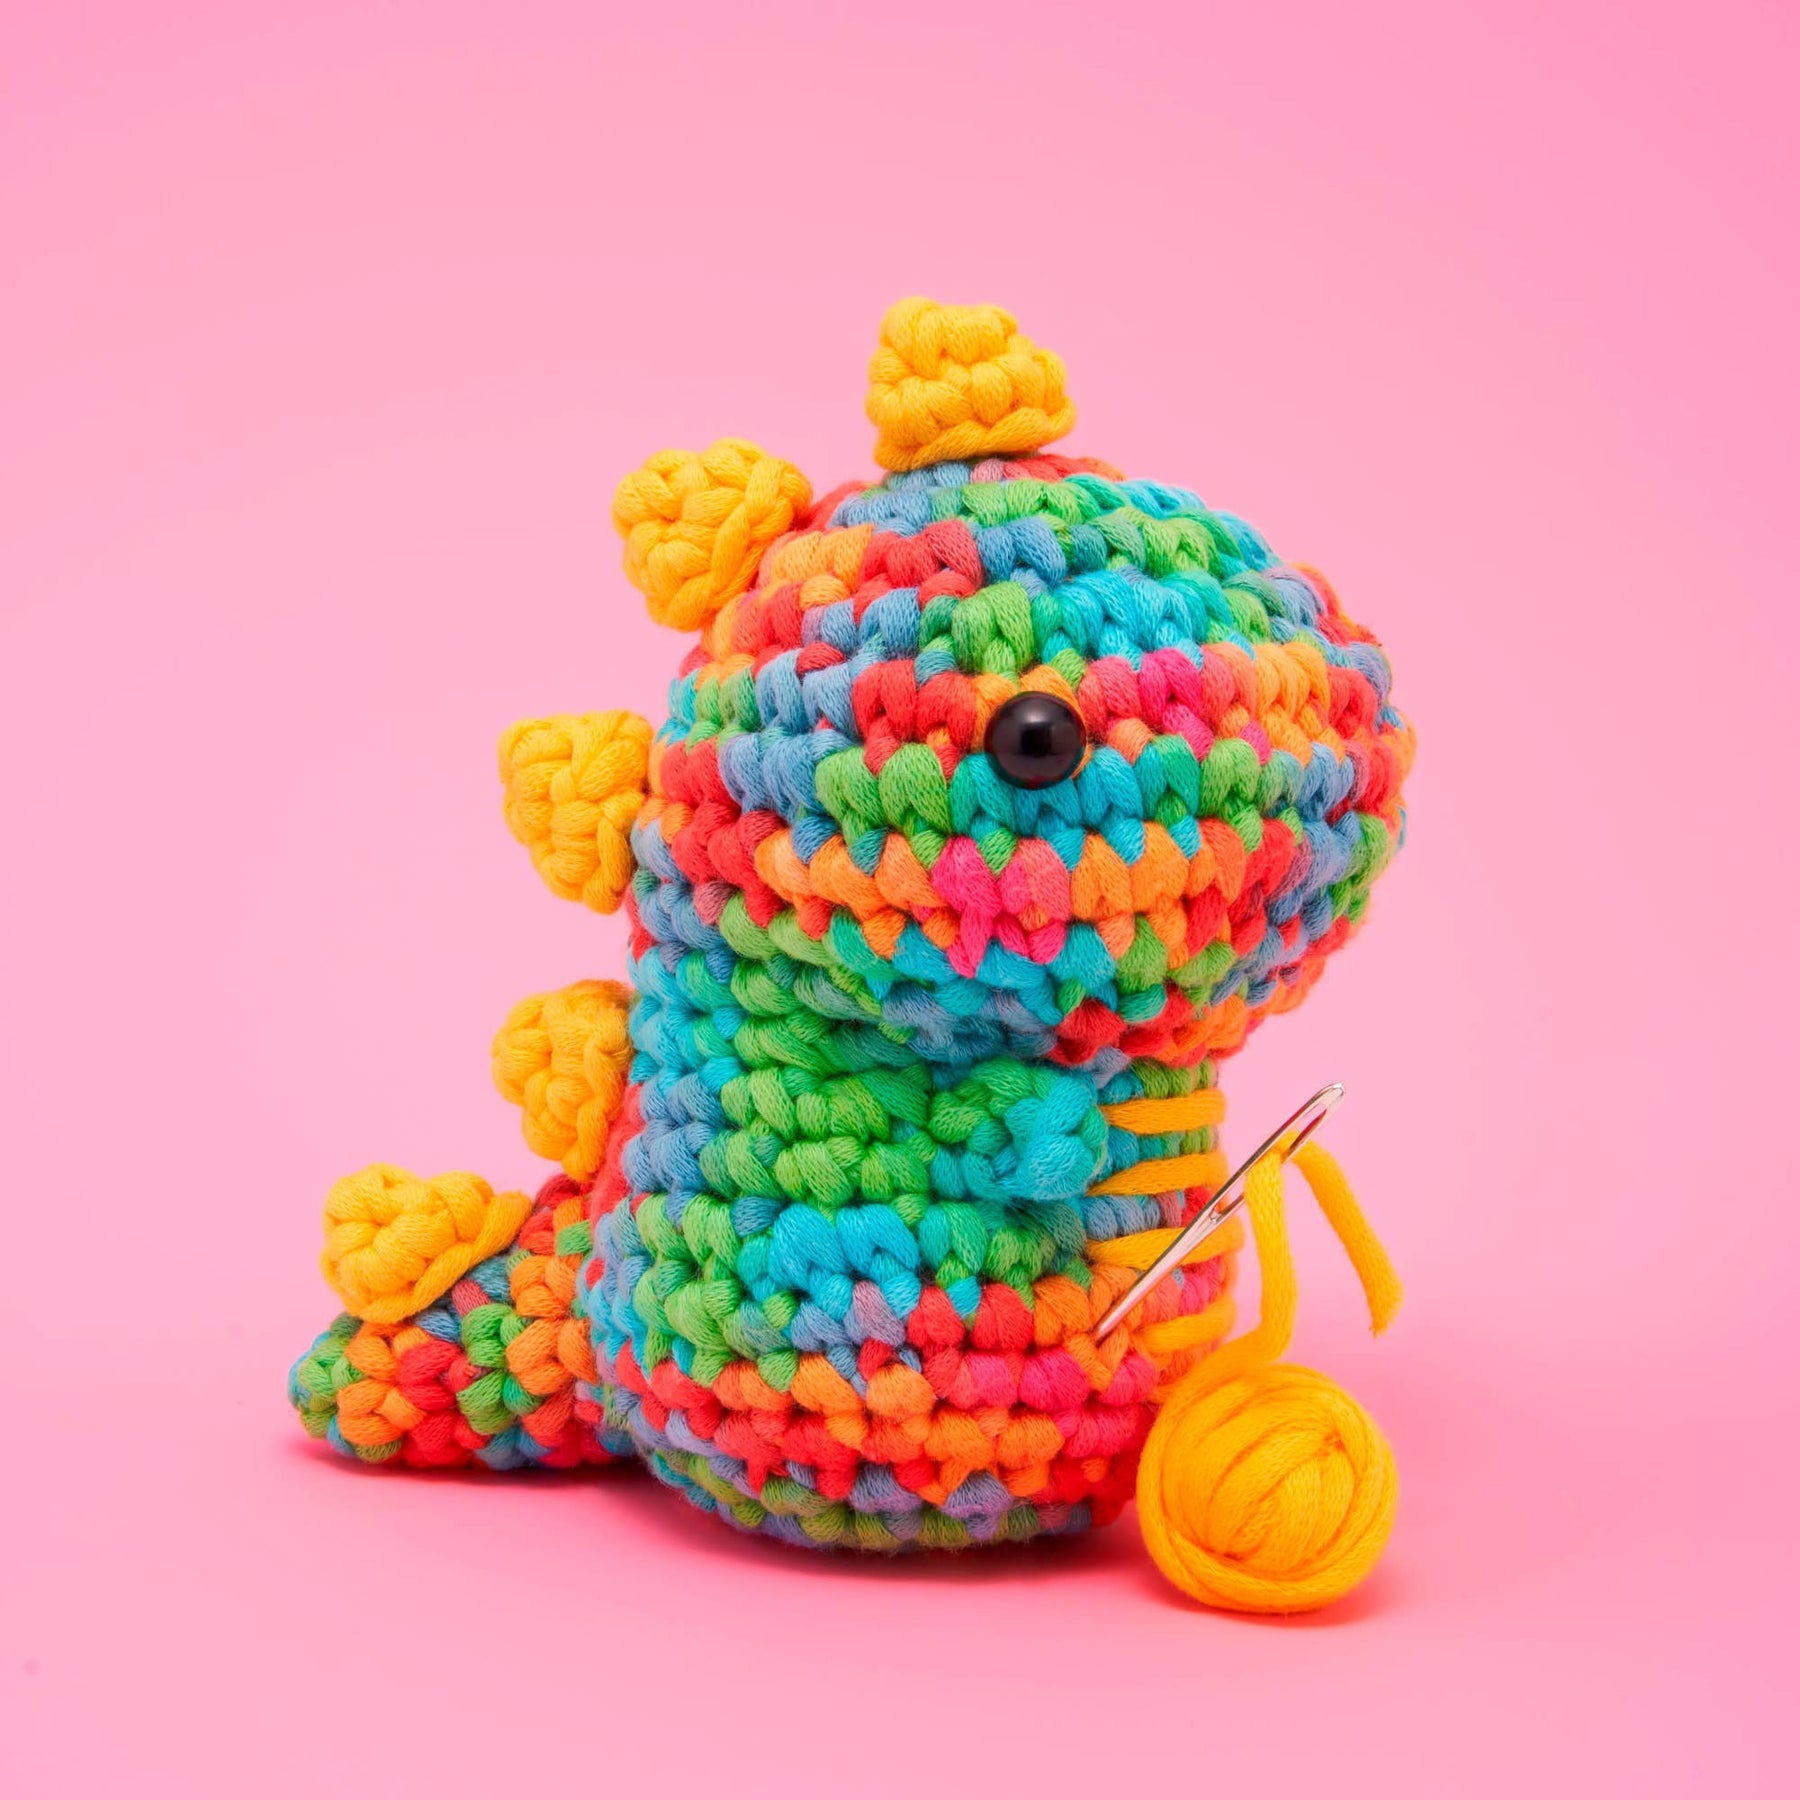 The Woobles Crochet Kit - Pierre the Penguin